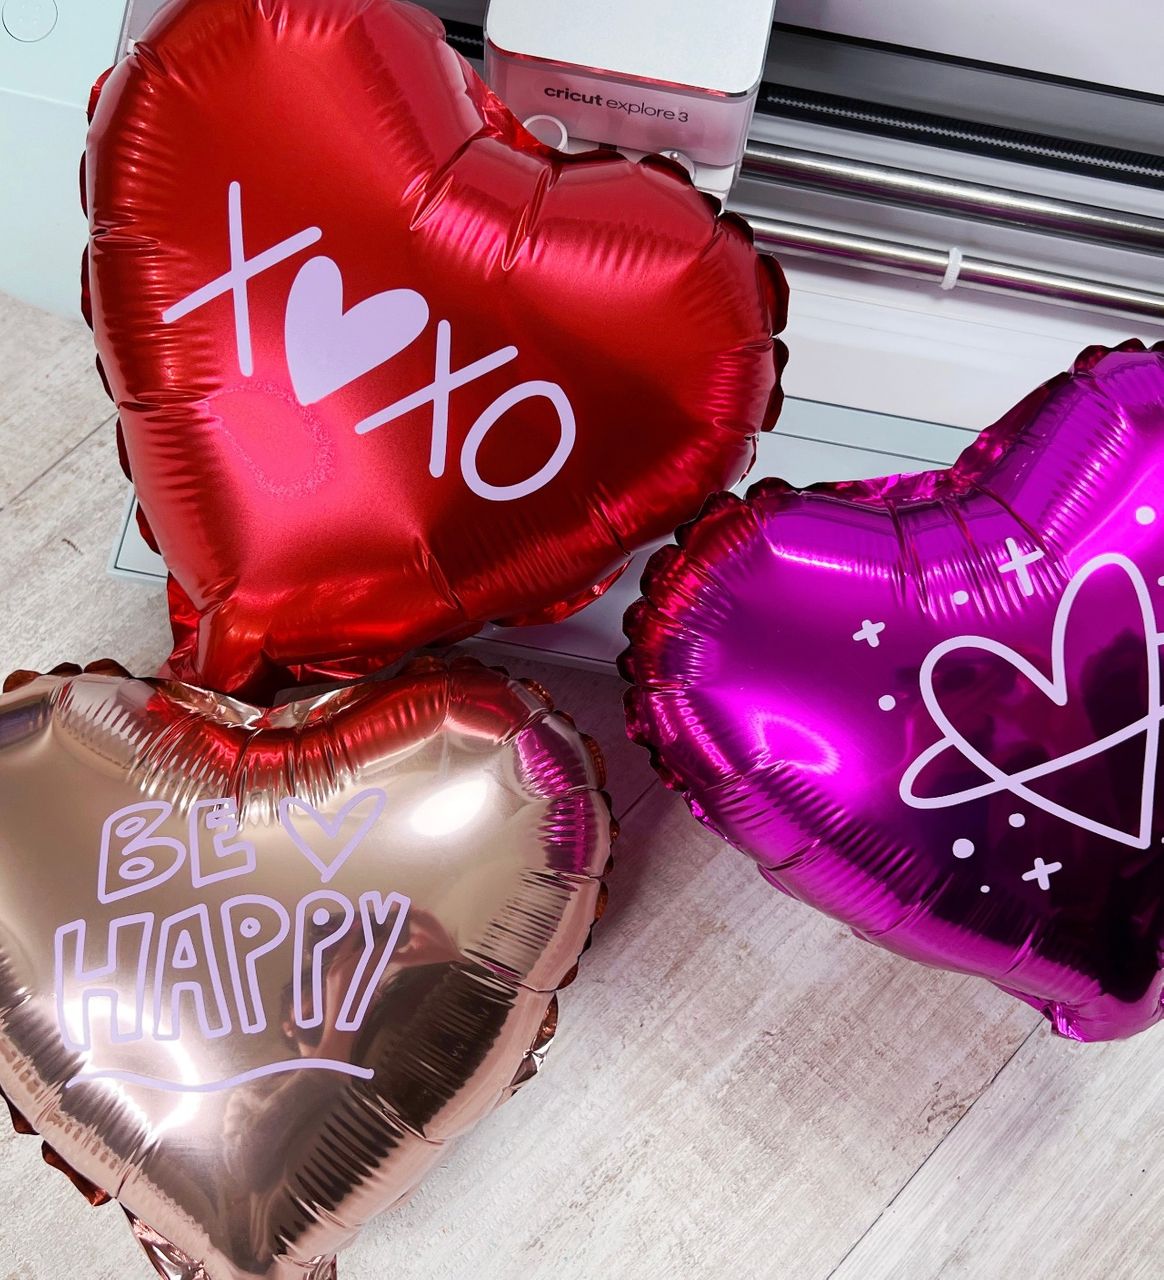 Vinyl Decals on Valentines Day Heart Balloons